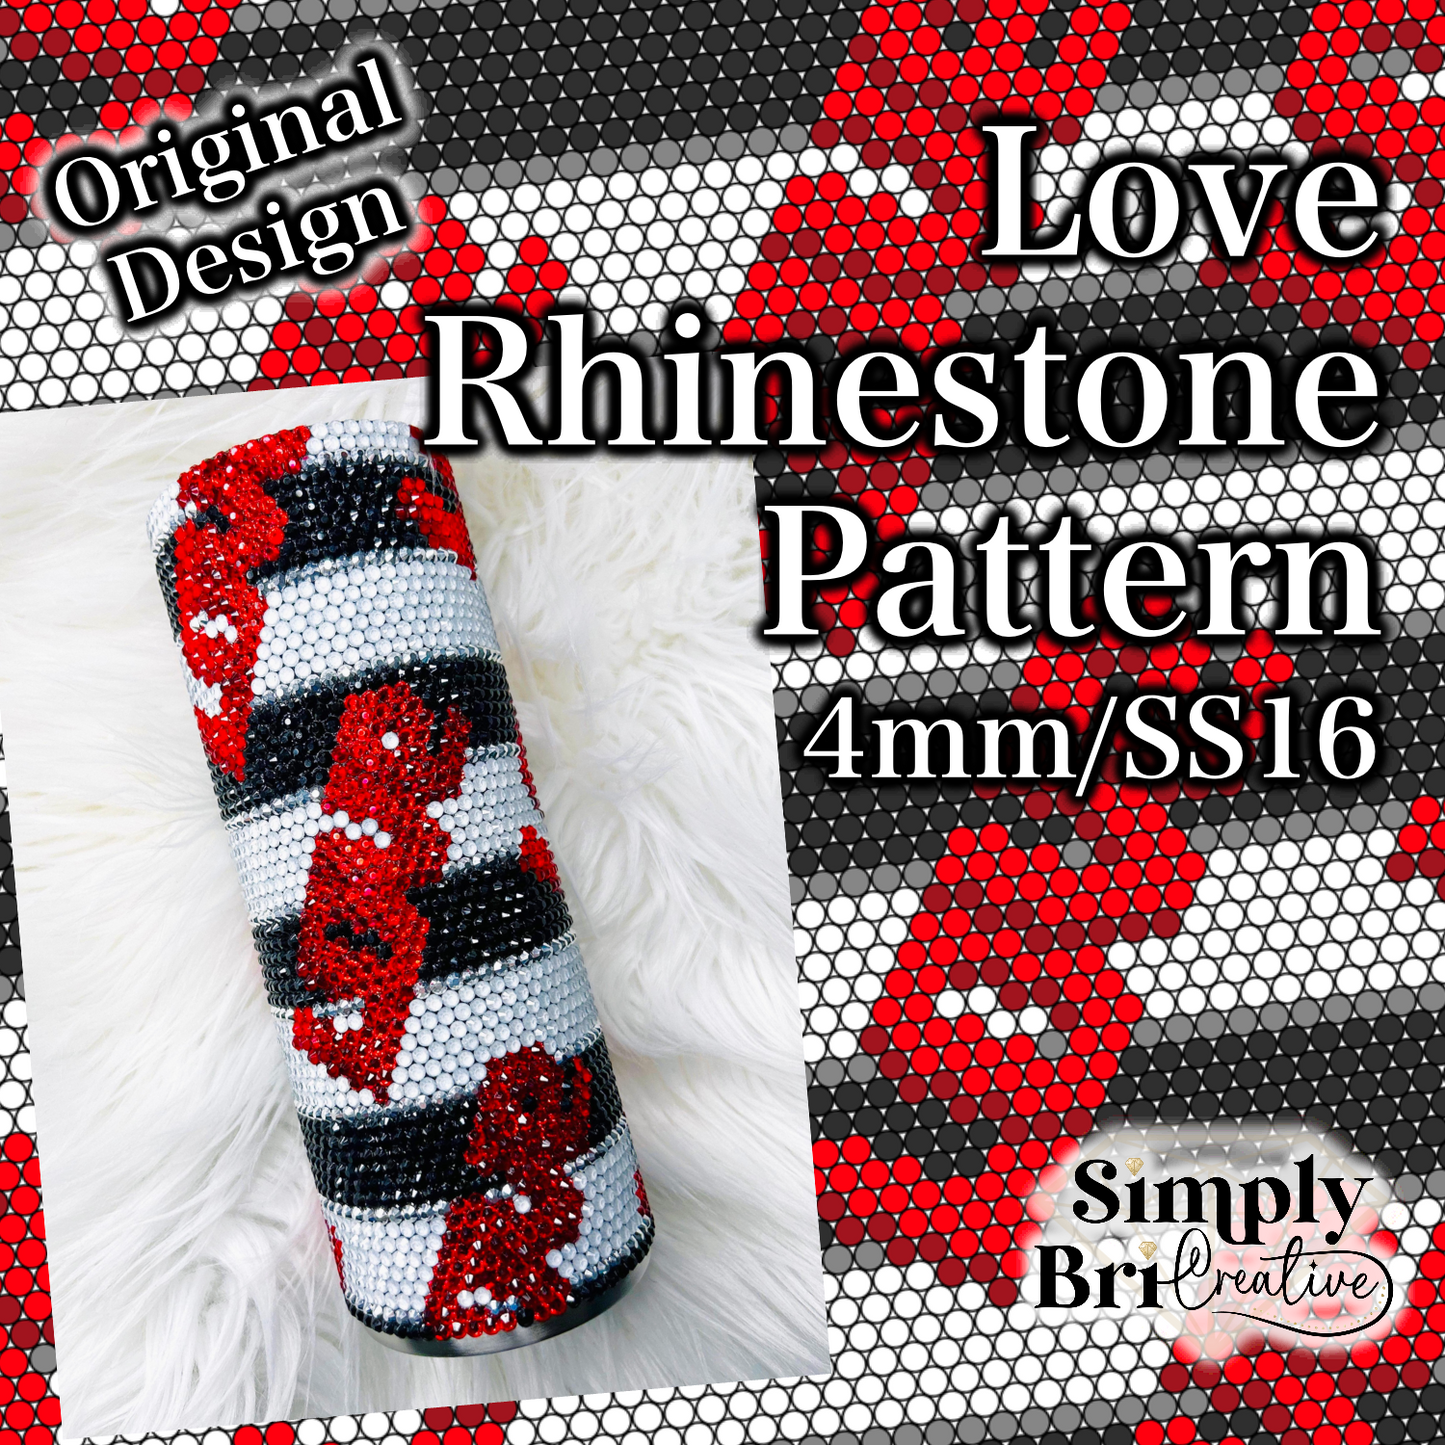 Love Rhinestone Pattern (4mm/SS16)